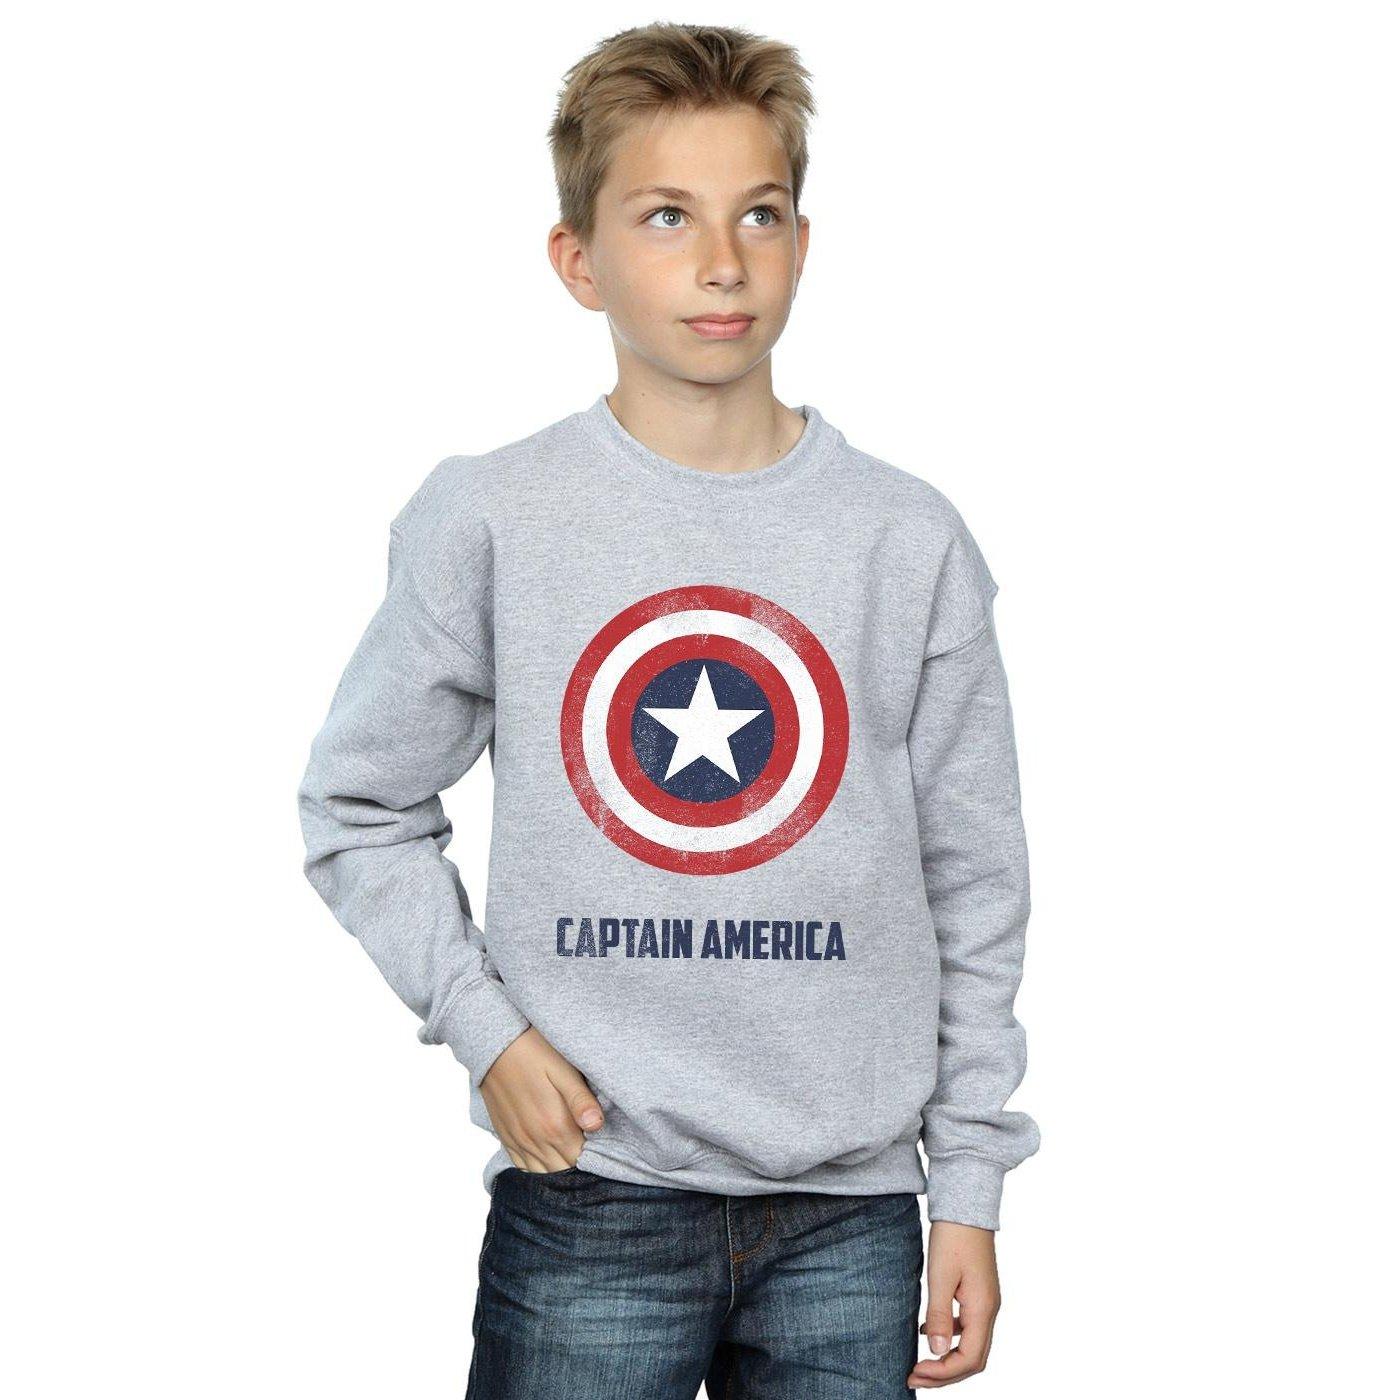 CAPTAIN AMERICA  Sweatshirt 